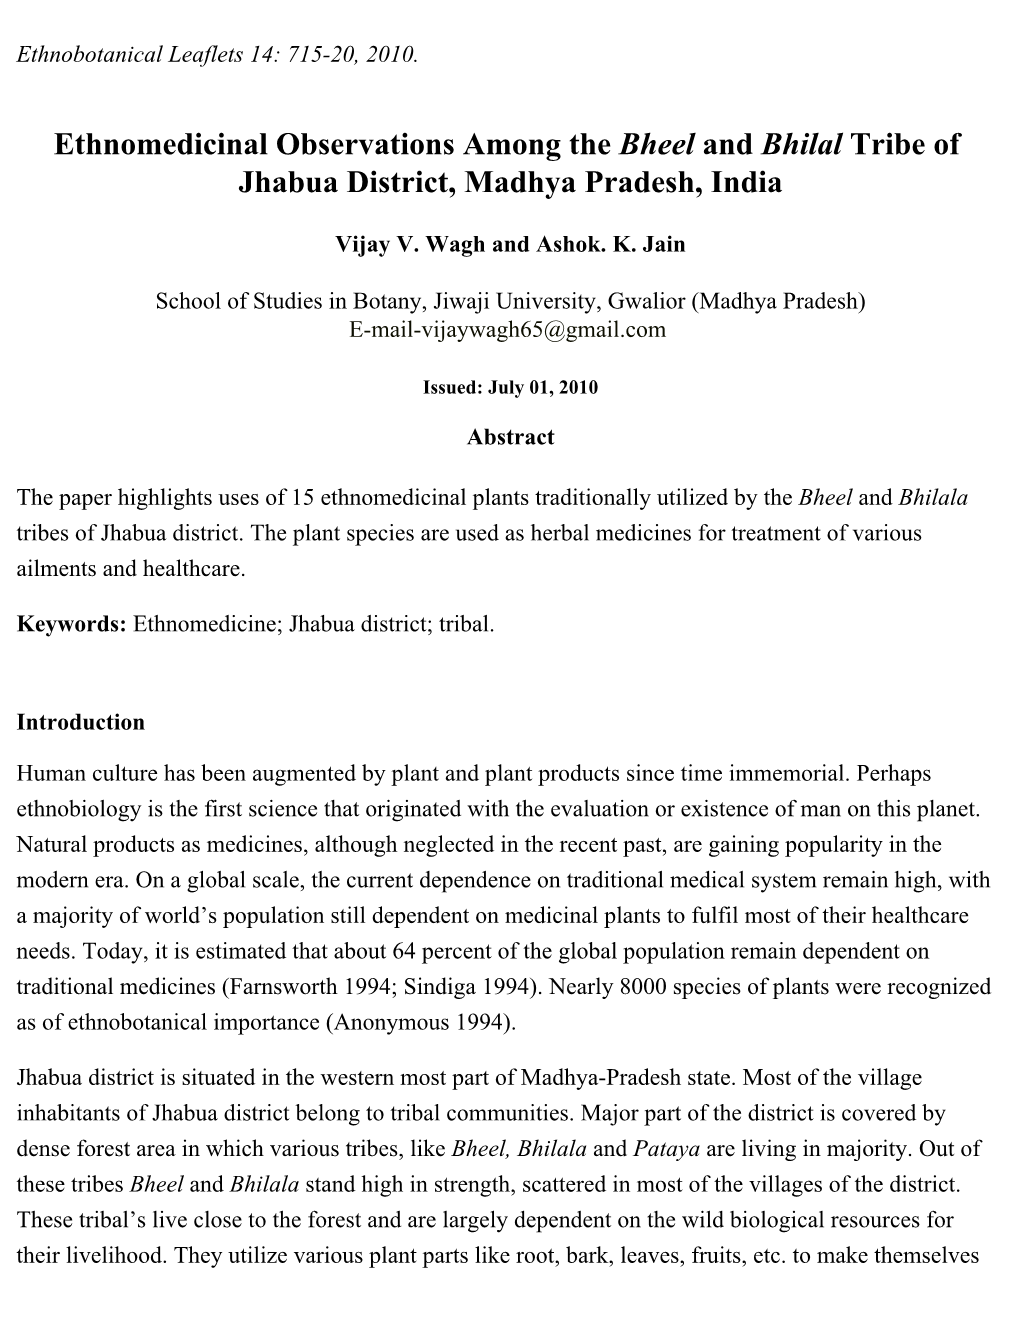 Ethnomedicinal Observations Among the Bheel and Bhilal Tribe of Jhabua District, Madhya Pradesh, India